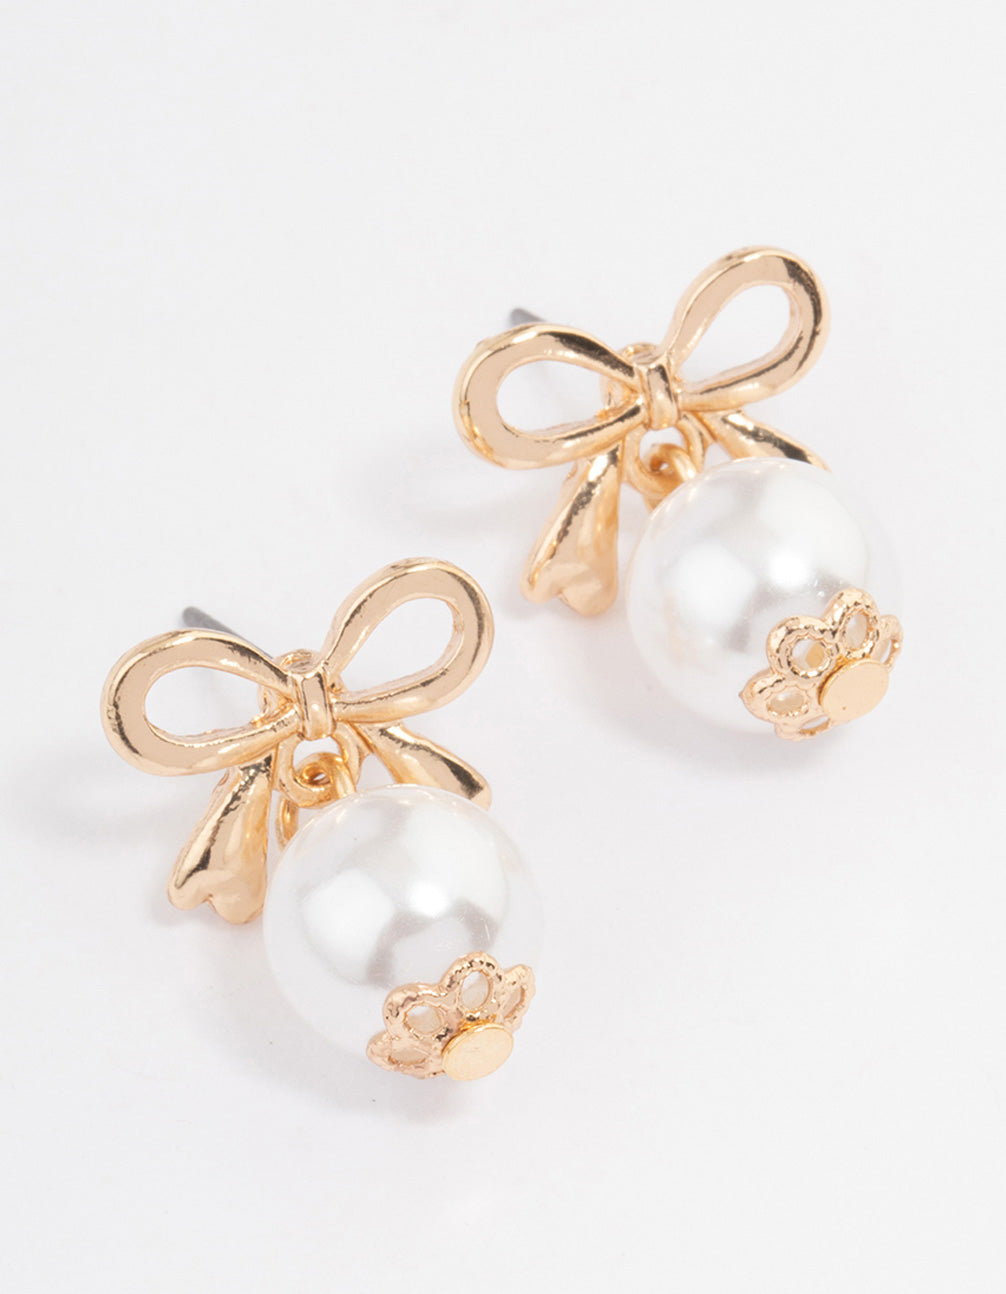 White Pearl Earrings - Bow Earrings - Pearl Bow Earrings - Lulus